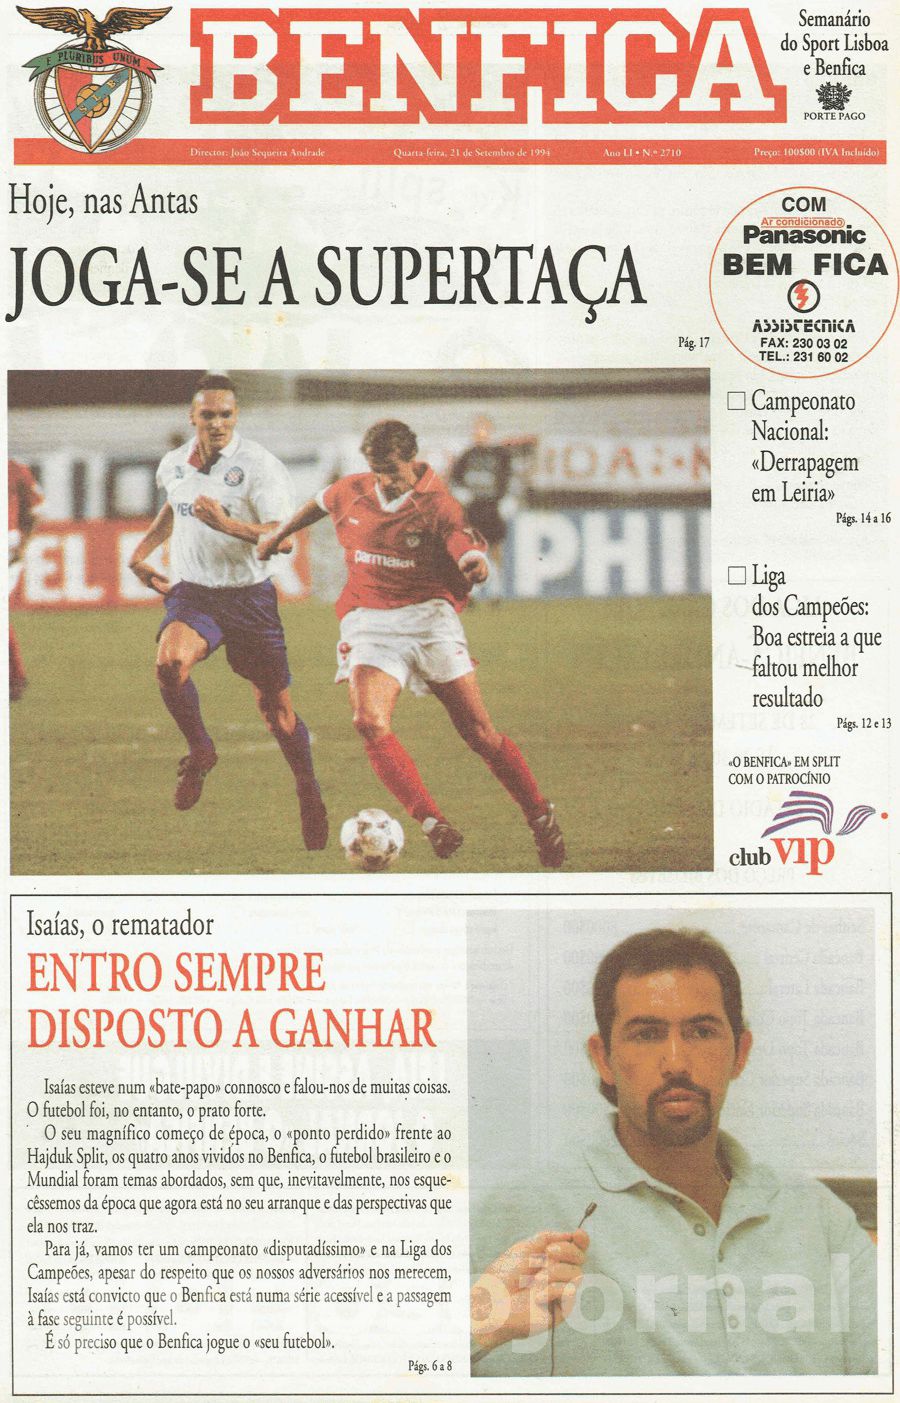 jornal o benfica 2710 1994-09-21